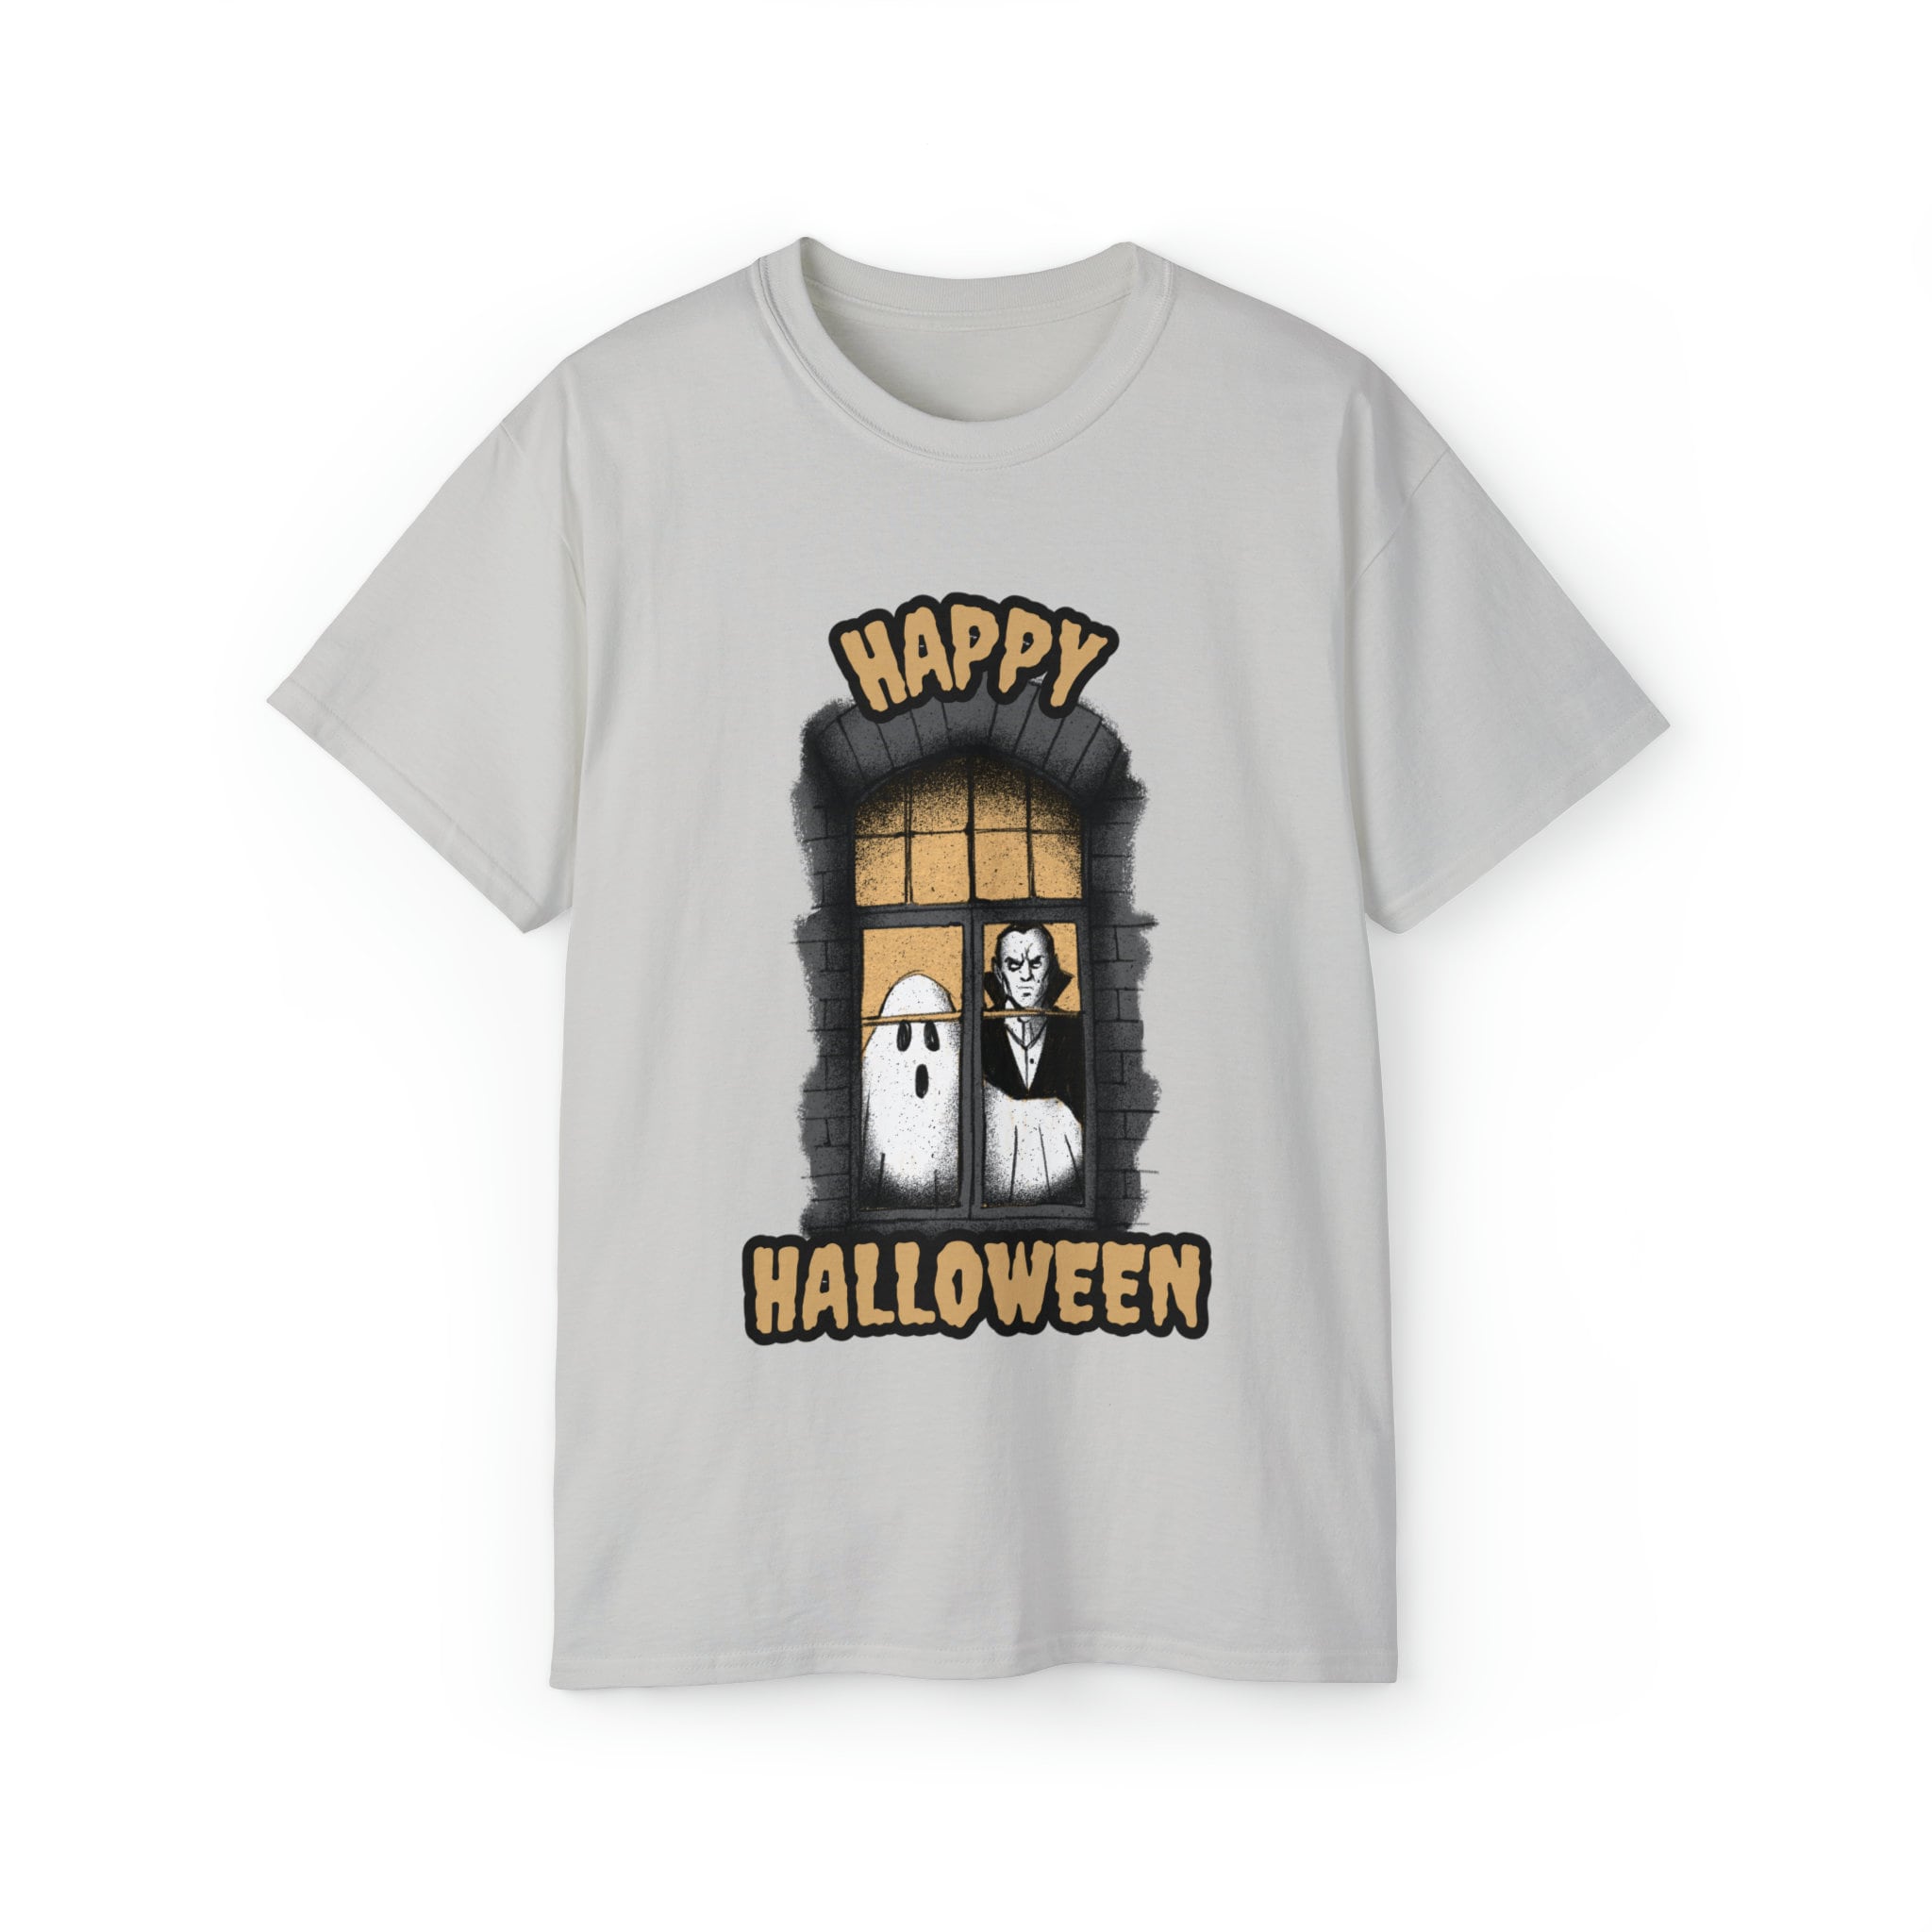 Halloween T-Shirt, Happy Halloween Shirt, Ghost Tee, Vampire Shirt, Autumn Shirt, Spooky Season, Scary Halloween Tee, Retro Halloween Shirt